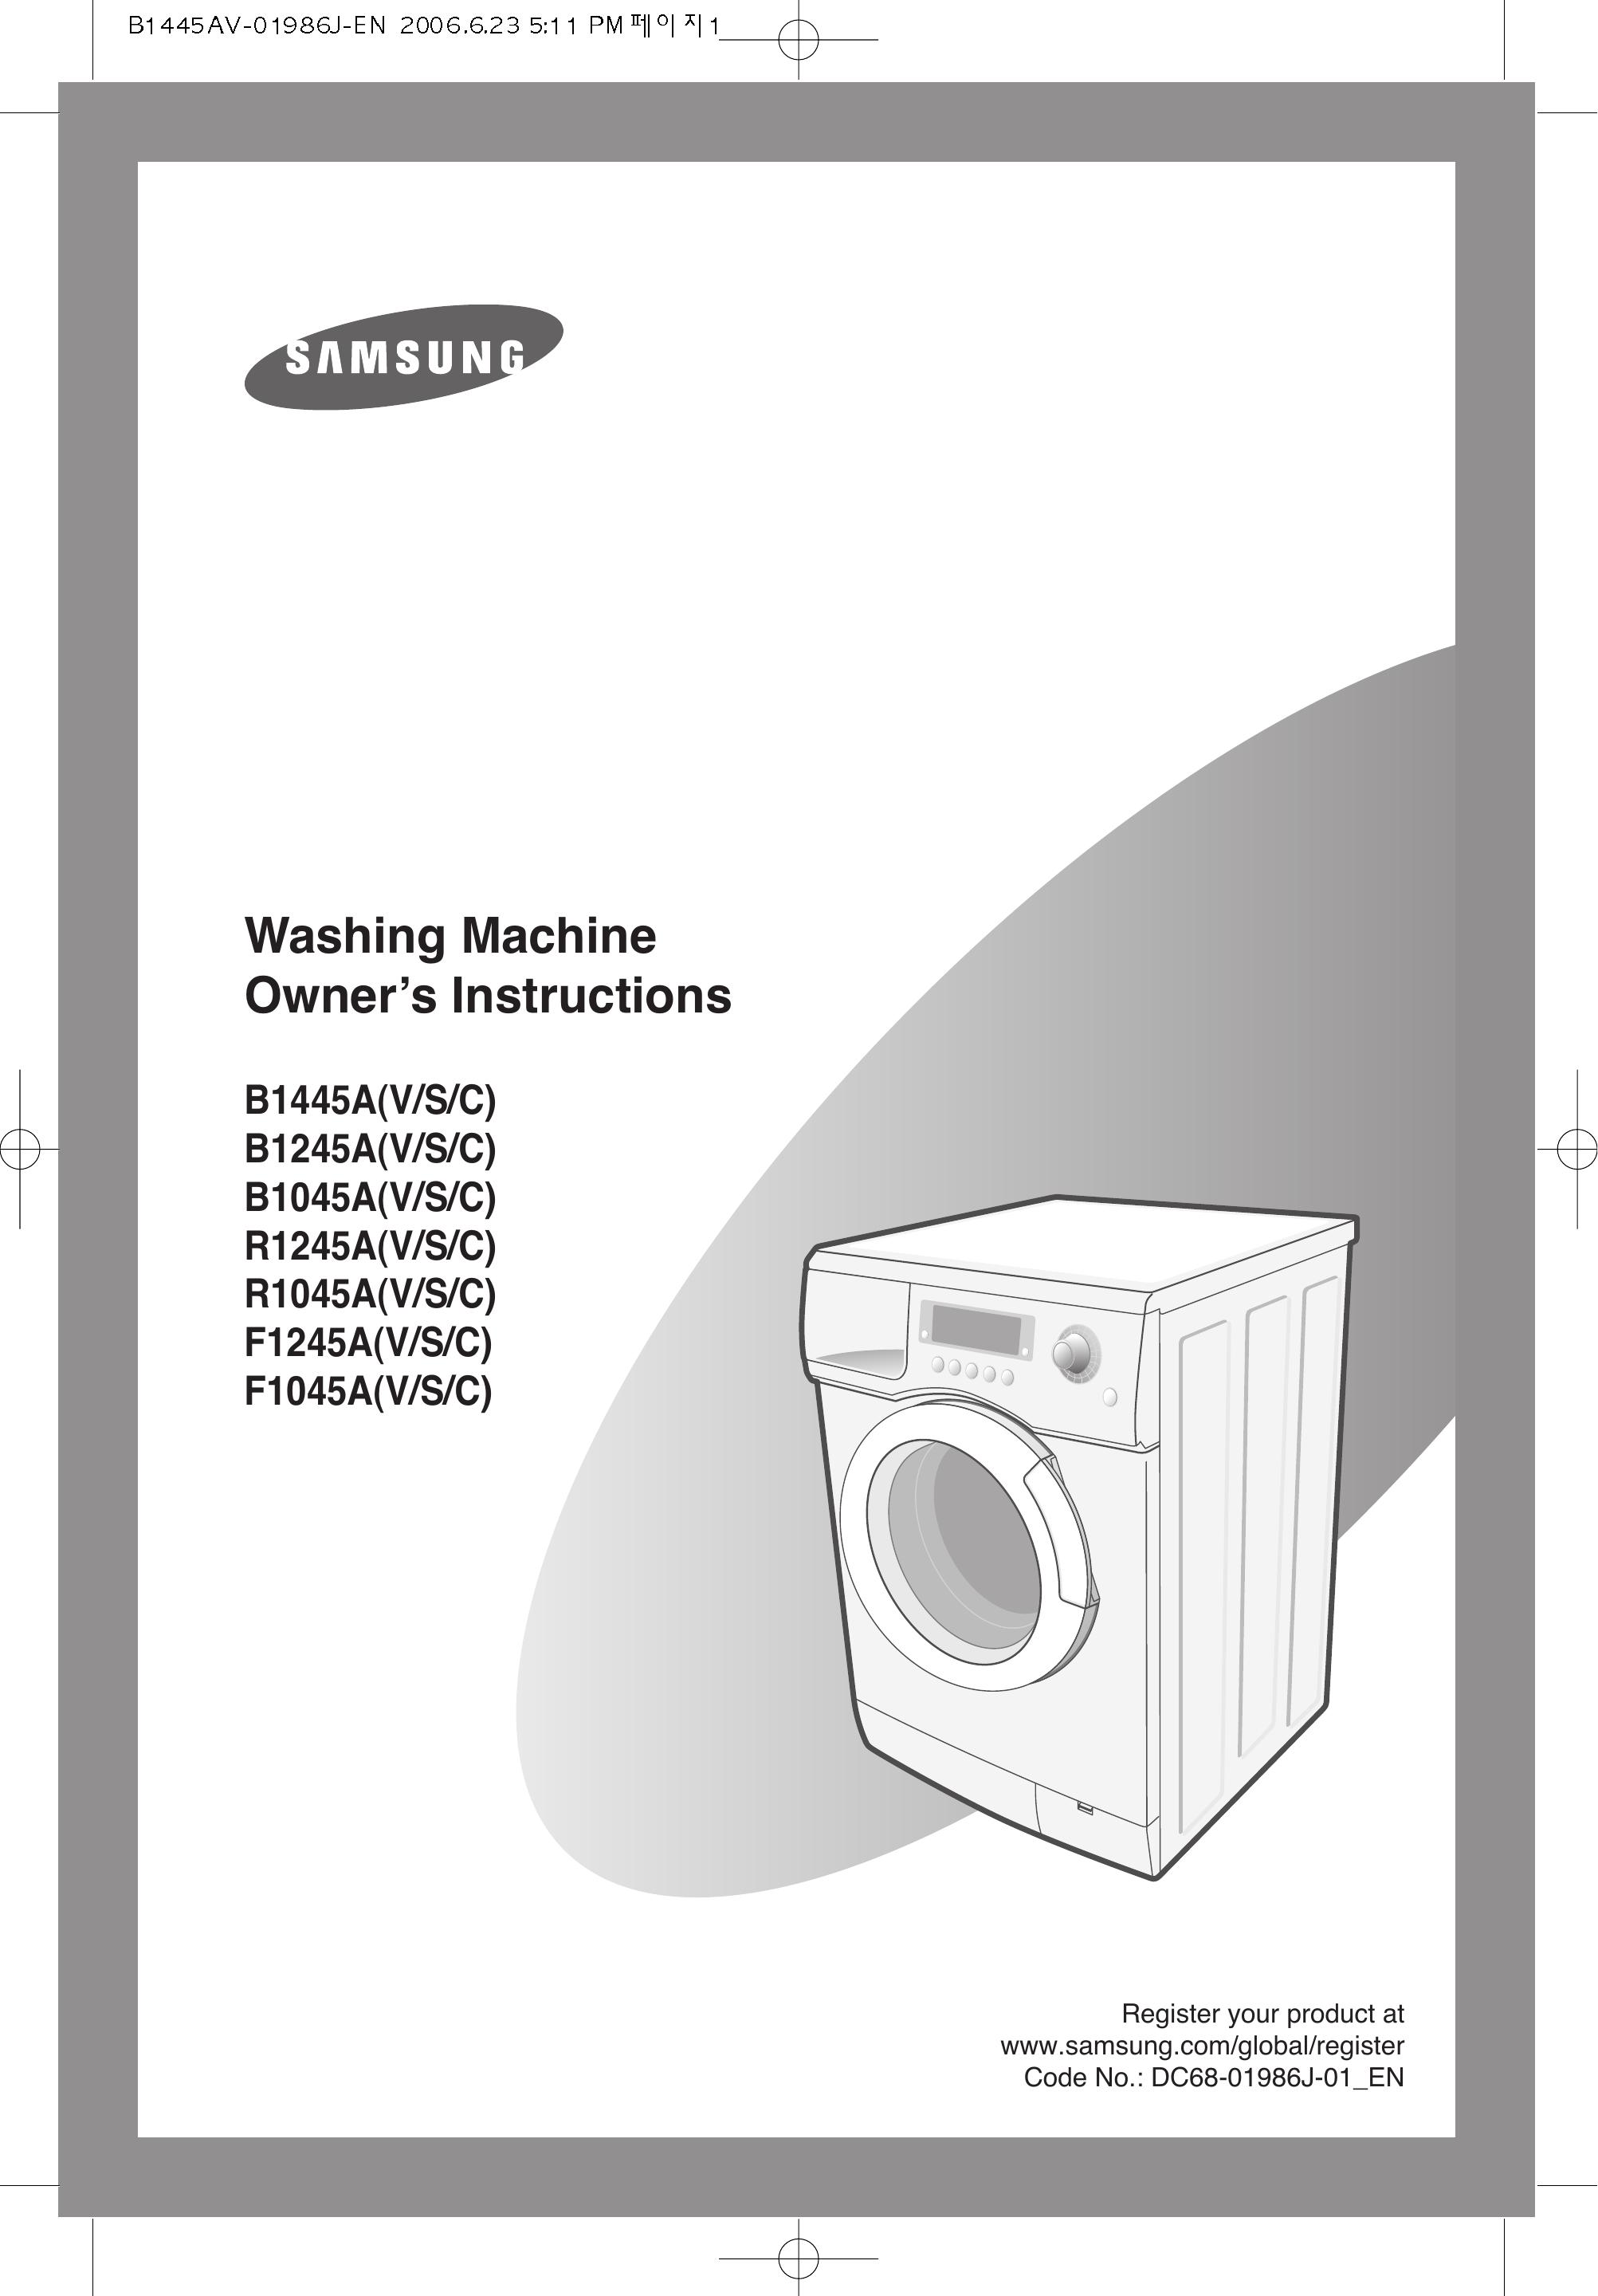 Samsung F1045A(V/S/C) Washer User Manual